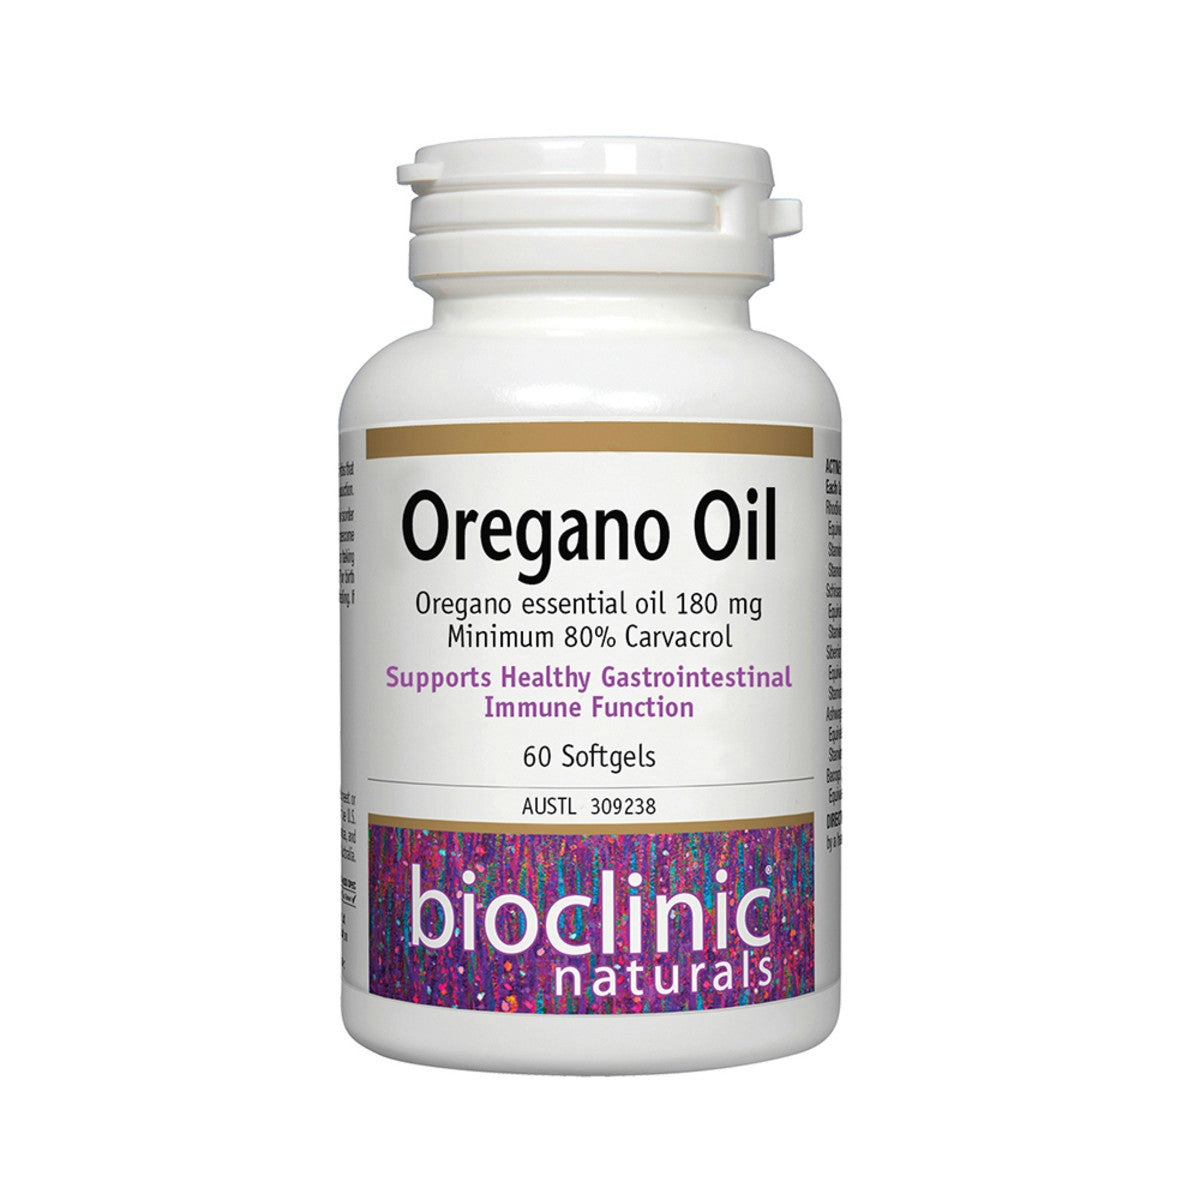 image of Bioclinic Naturals Oregano Oil 60c on white background 